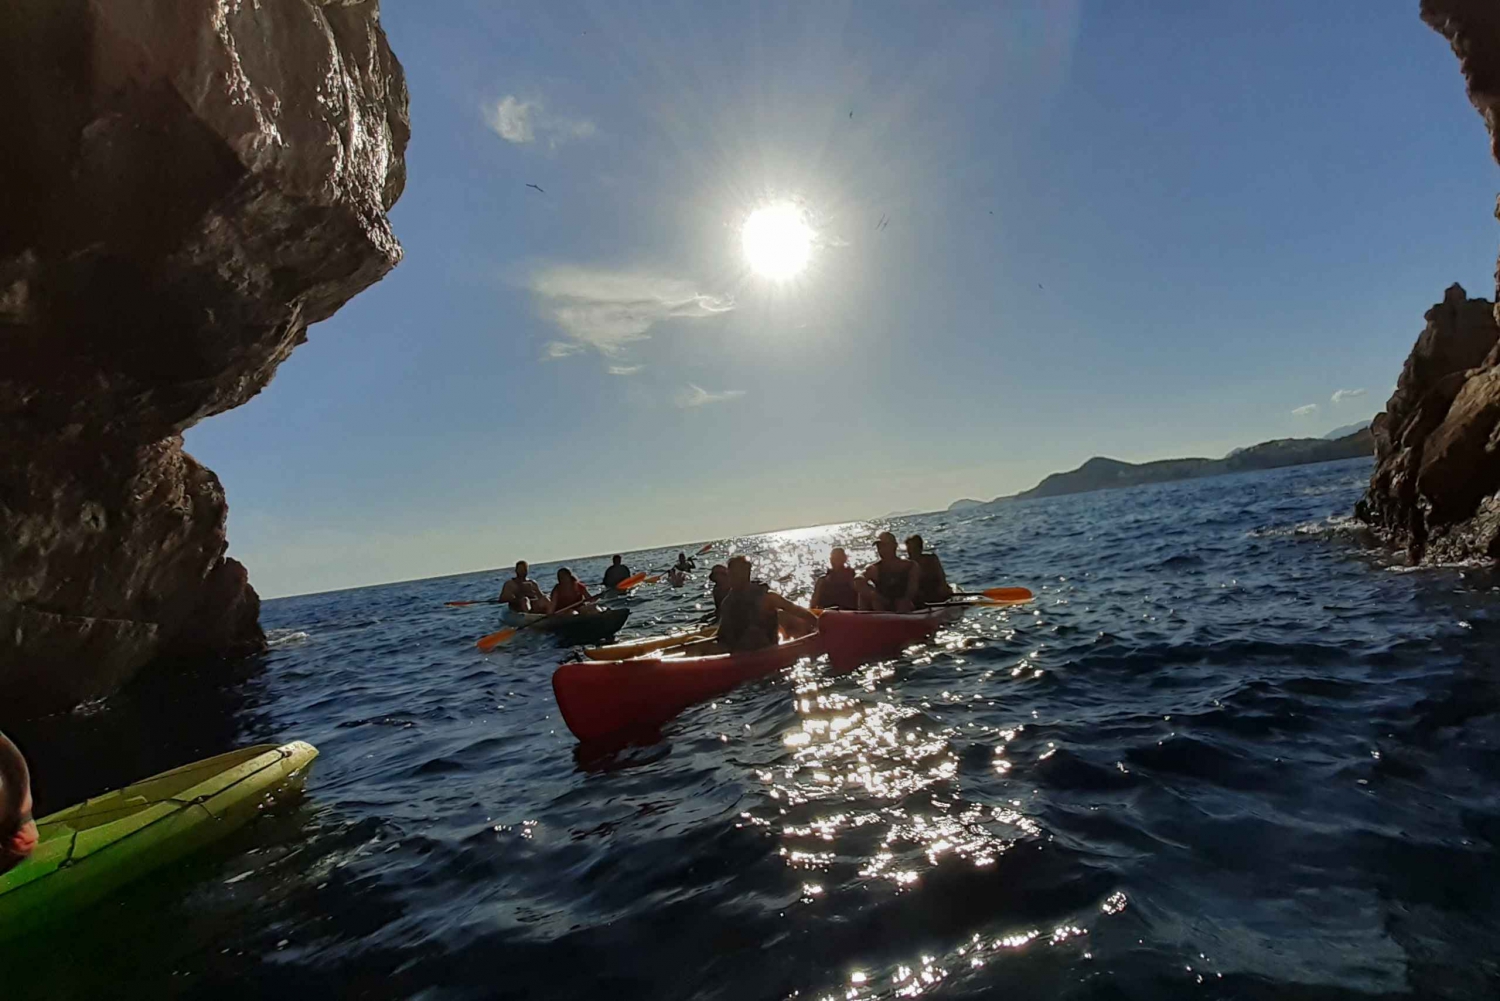 Dubrovnik: Early Morning Kayaking Trip to Betina Cave